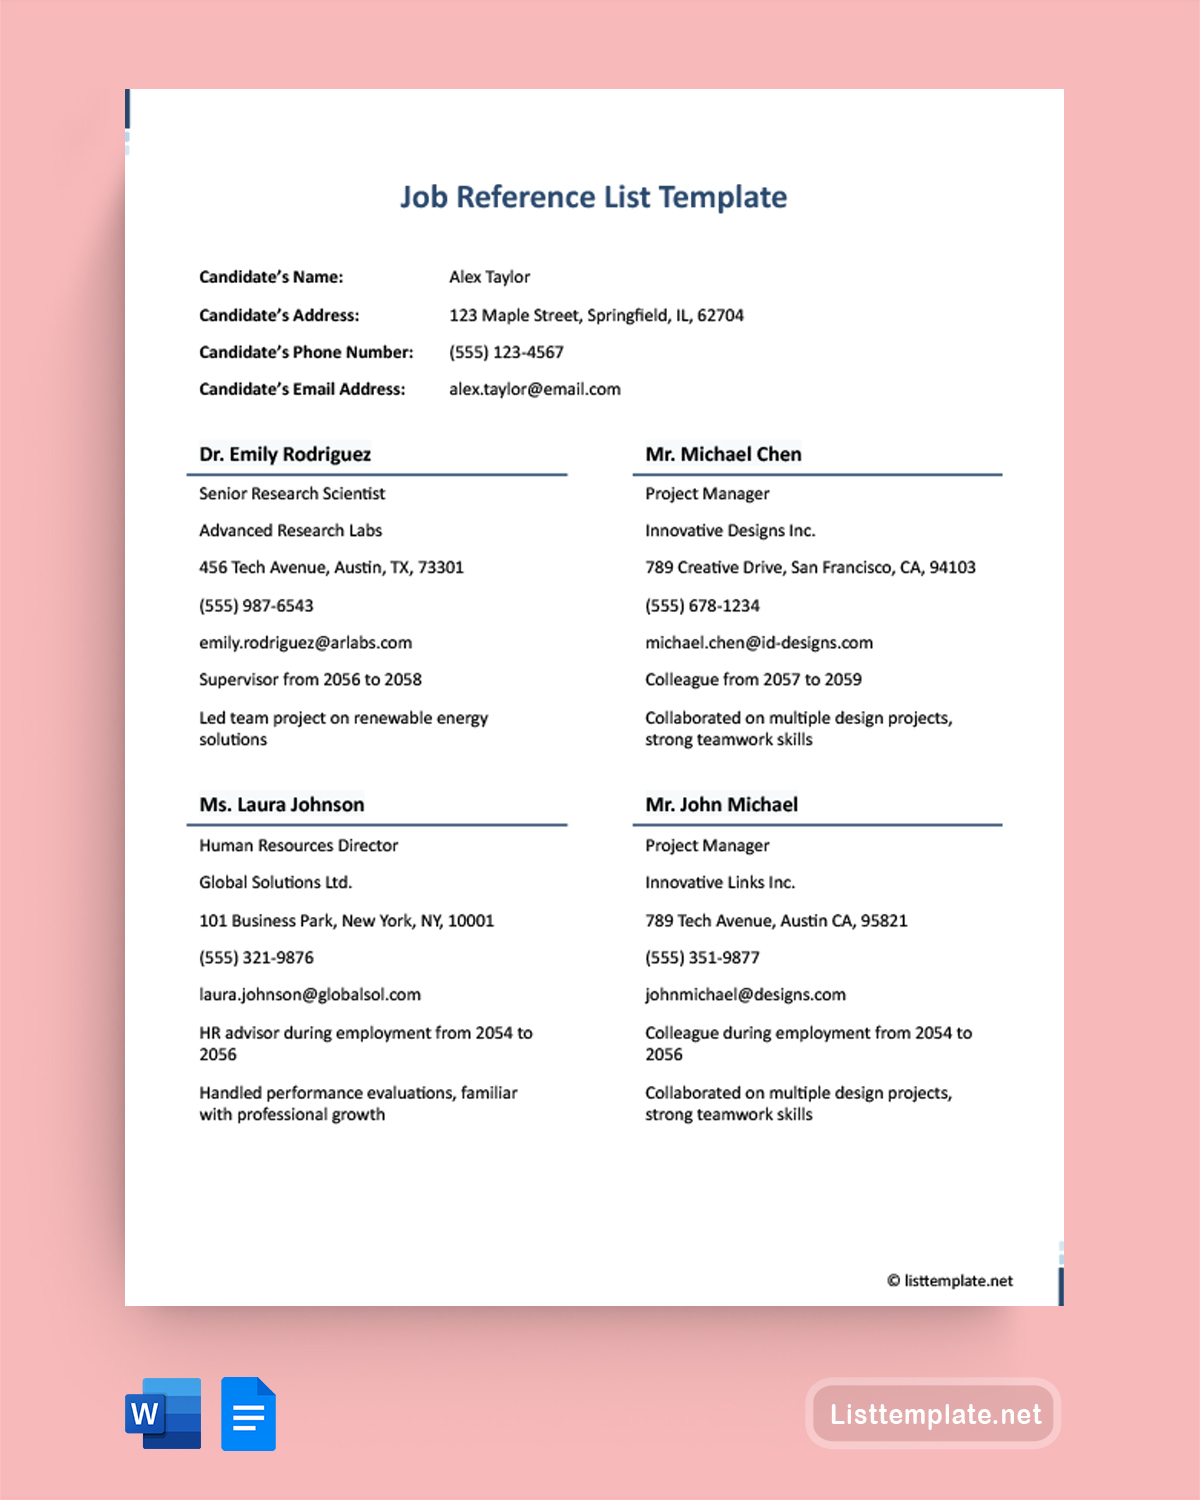 Job Reference List Template - Word, Google Docs